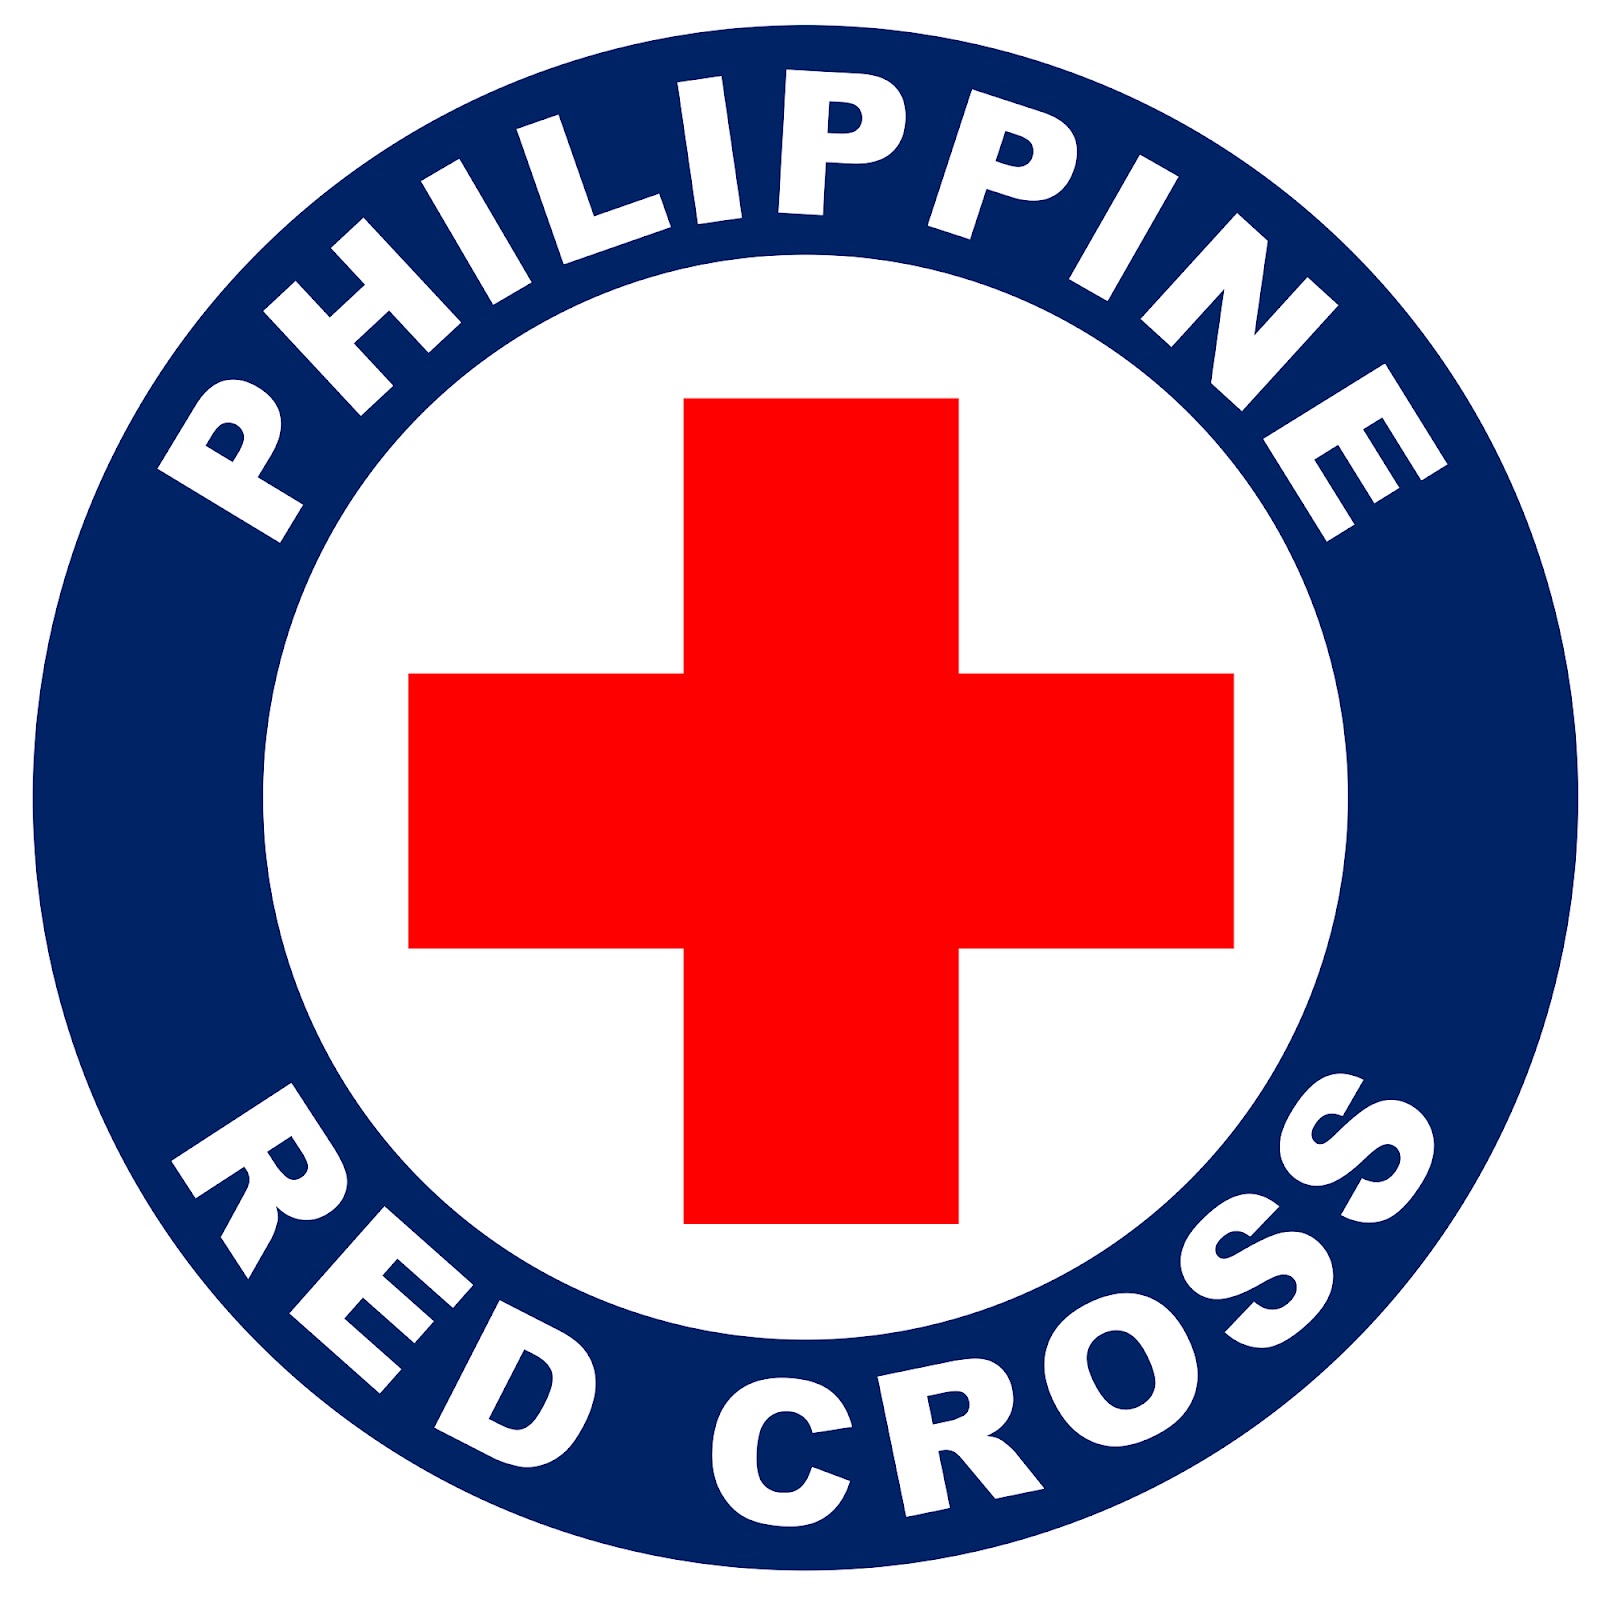 Philippine Red Cross logo.jpg